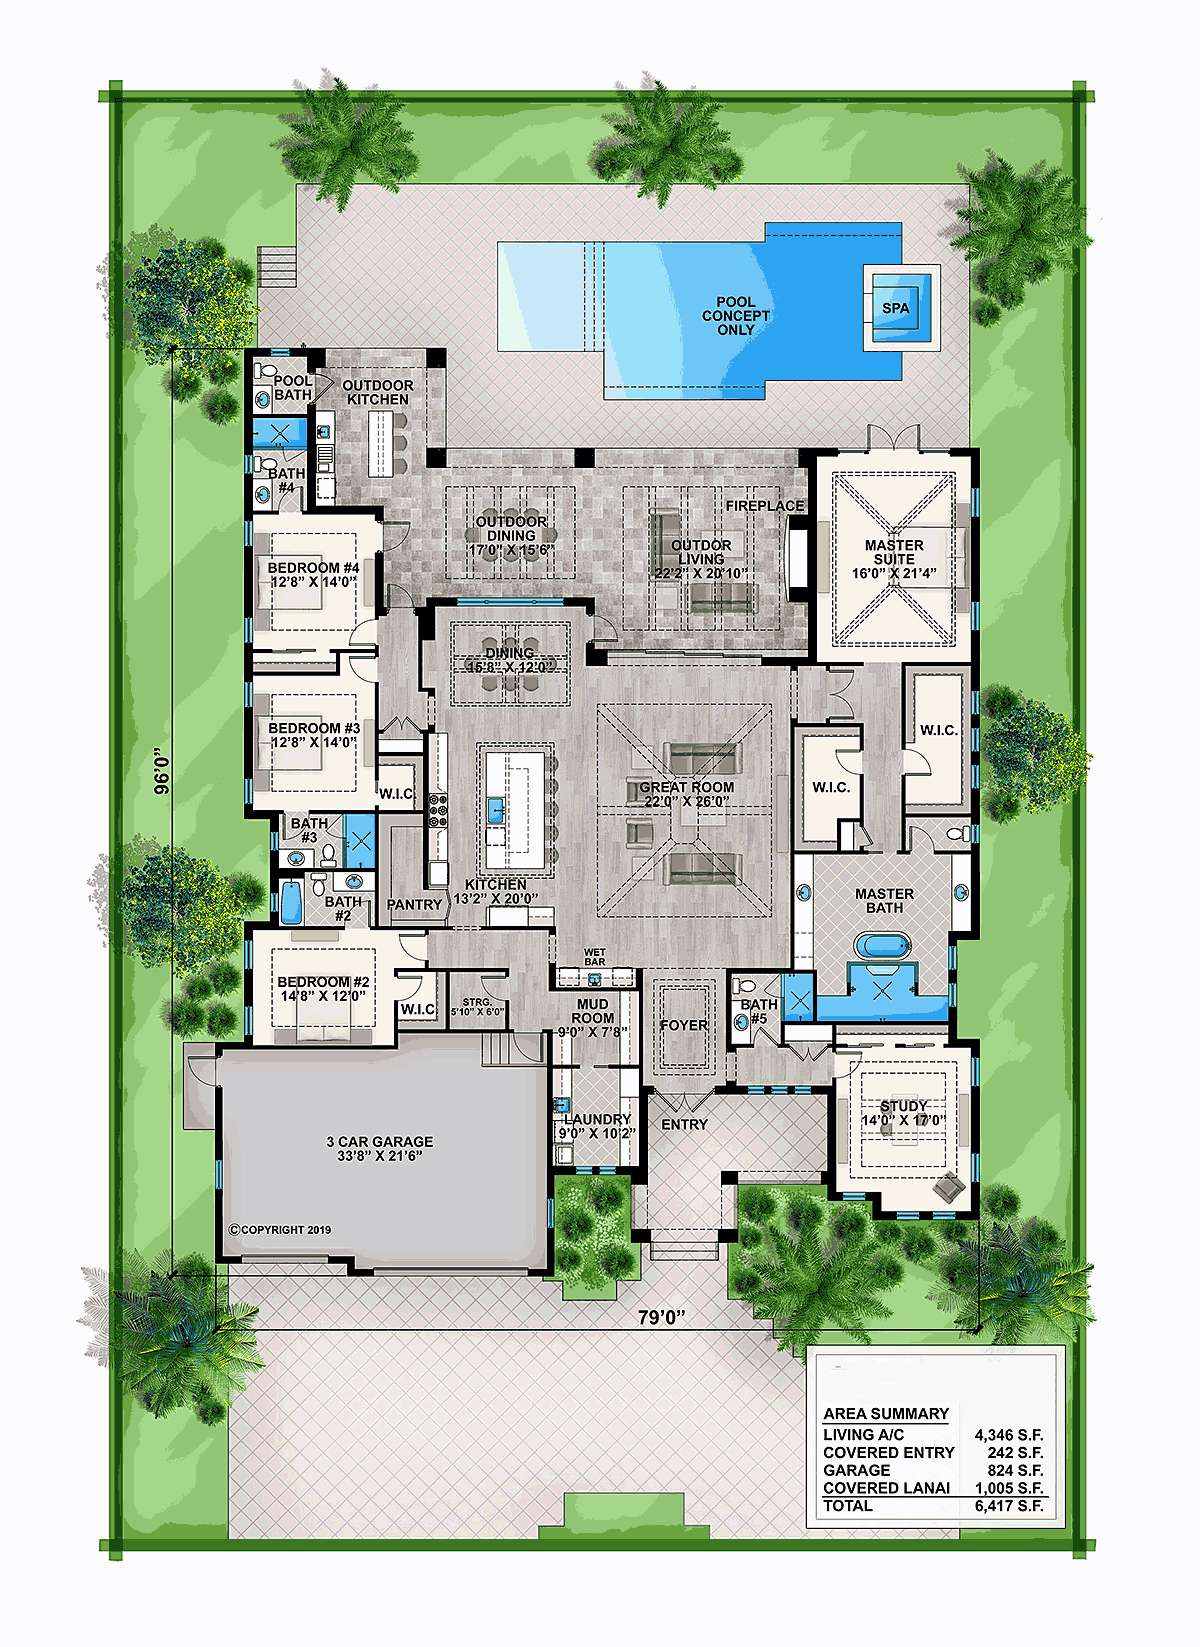 Mansion 8 Bedroom House Floor Plans - Joeryo ideas